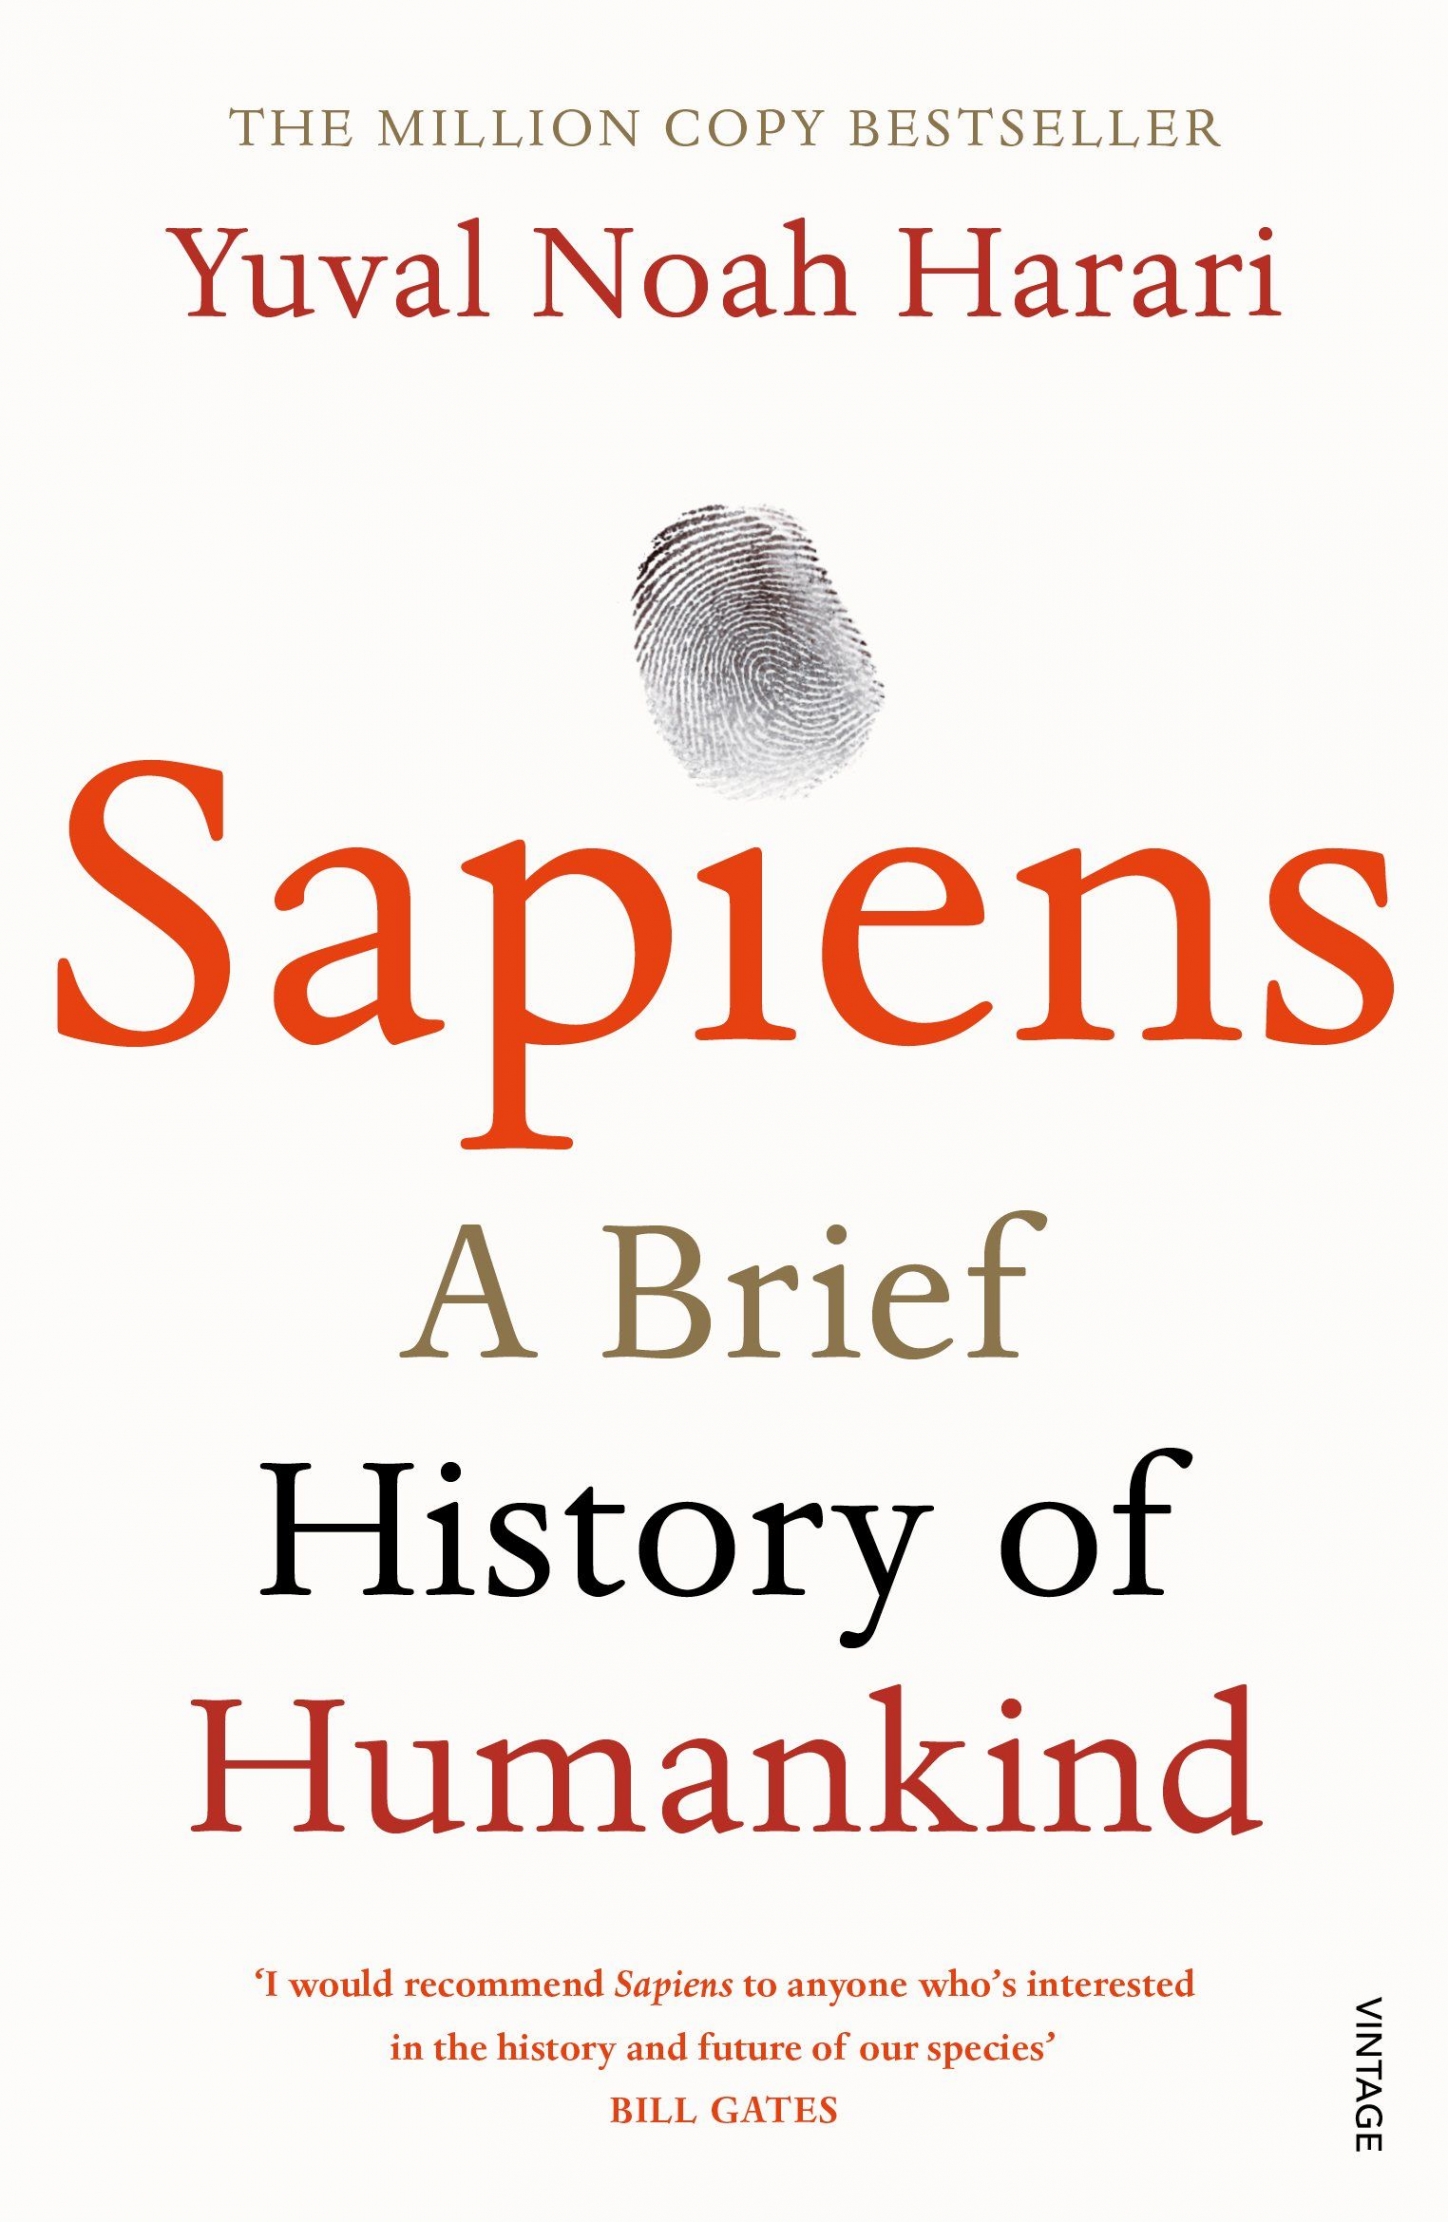 Yuval Noah Harari Sapiens: A Brief History of Humankind. -  : Vintage Books, 2014 